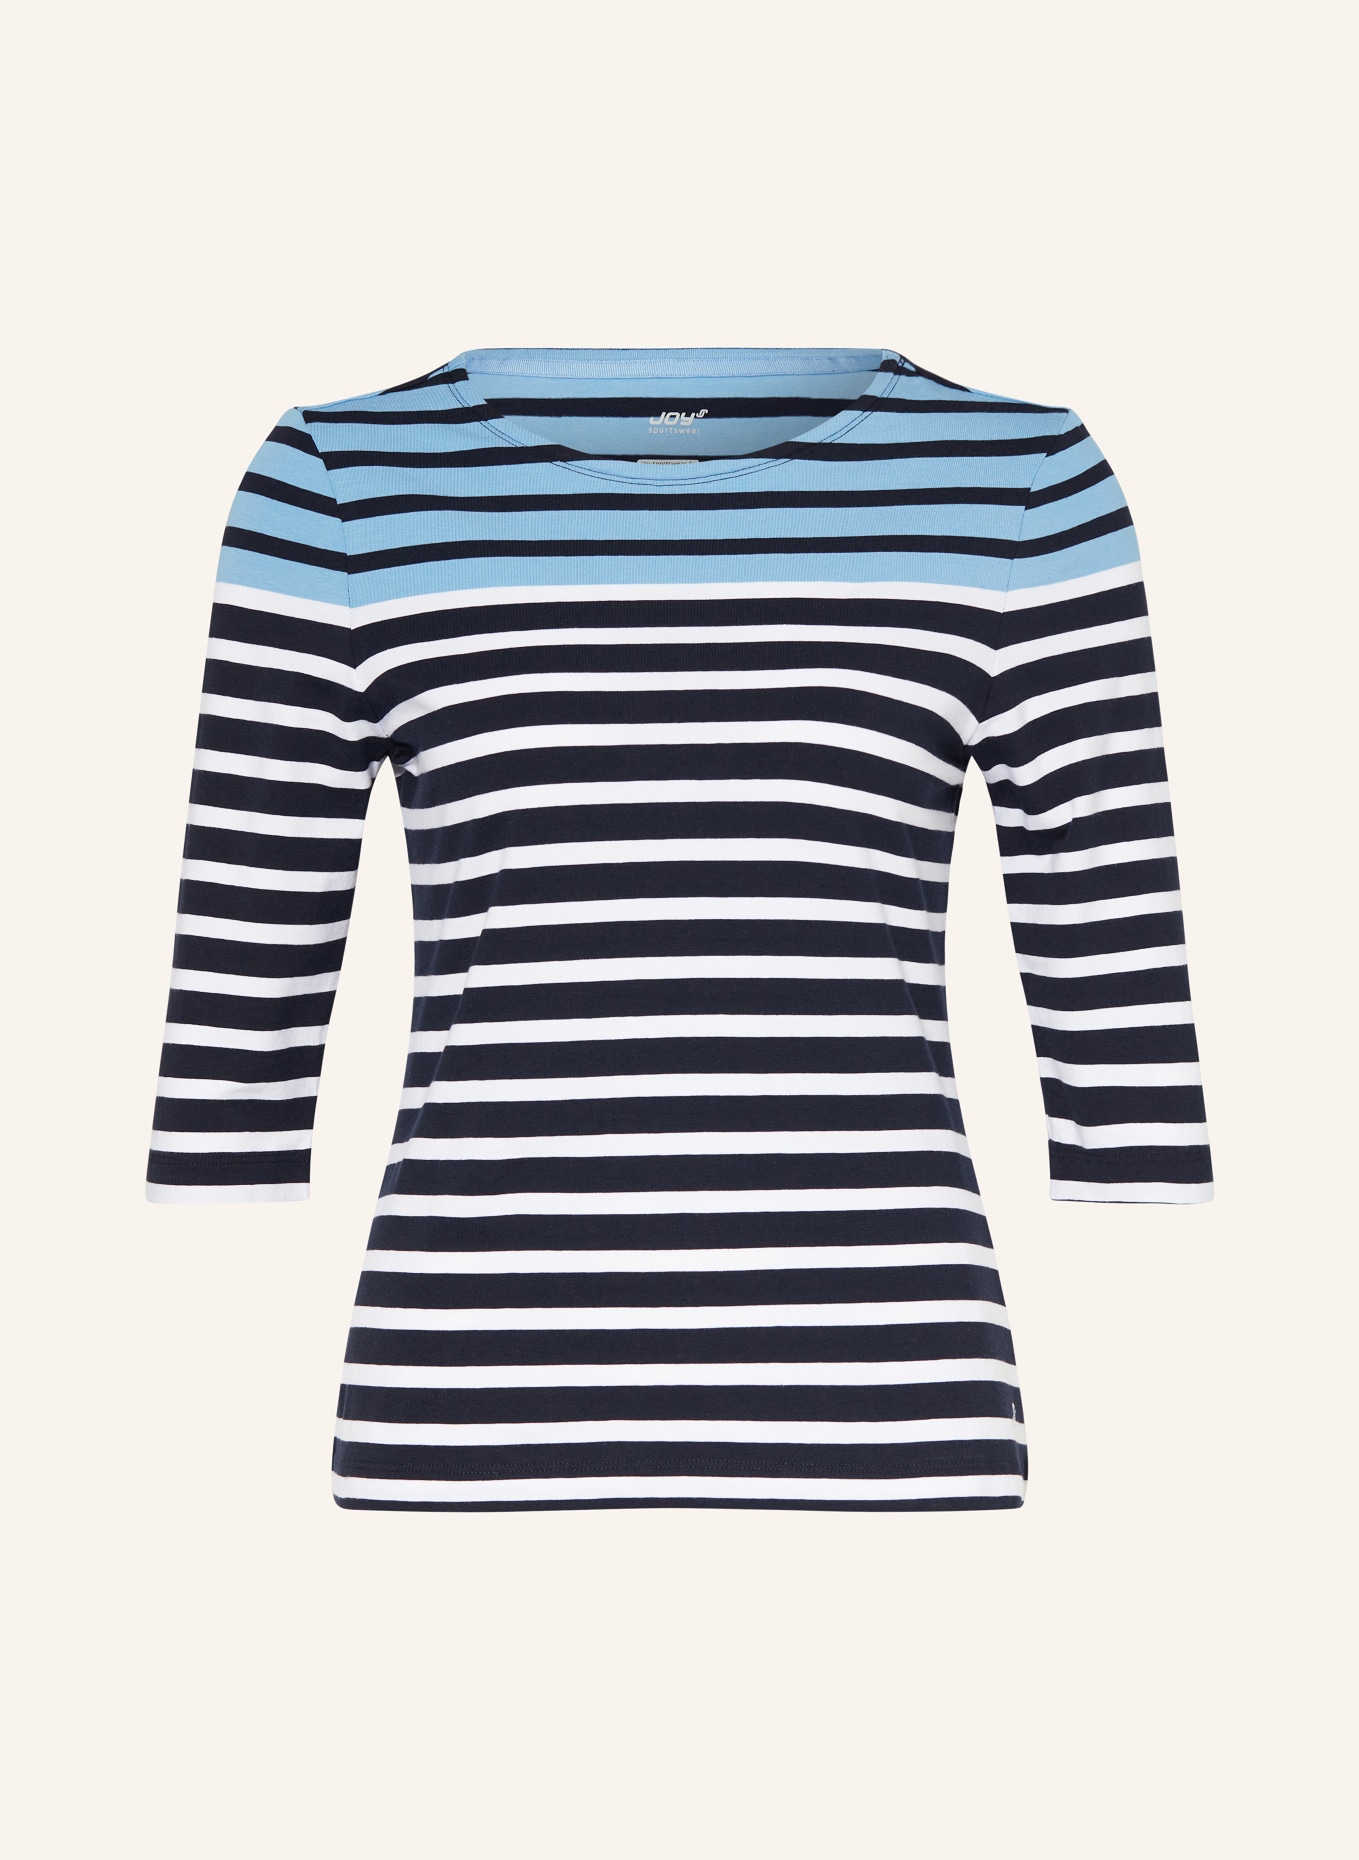 JOY sportswear Shirt CELIA with 3/4 sleeves, Color: DARK BLUE/ LIGHT BLUE/ WHITE (Image 1)